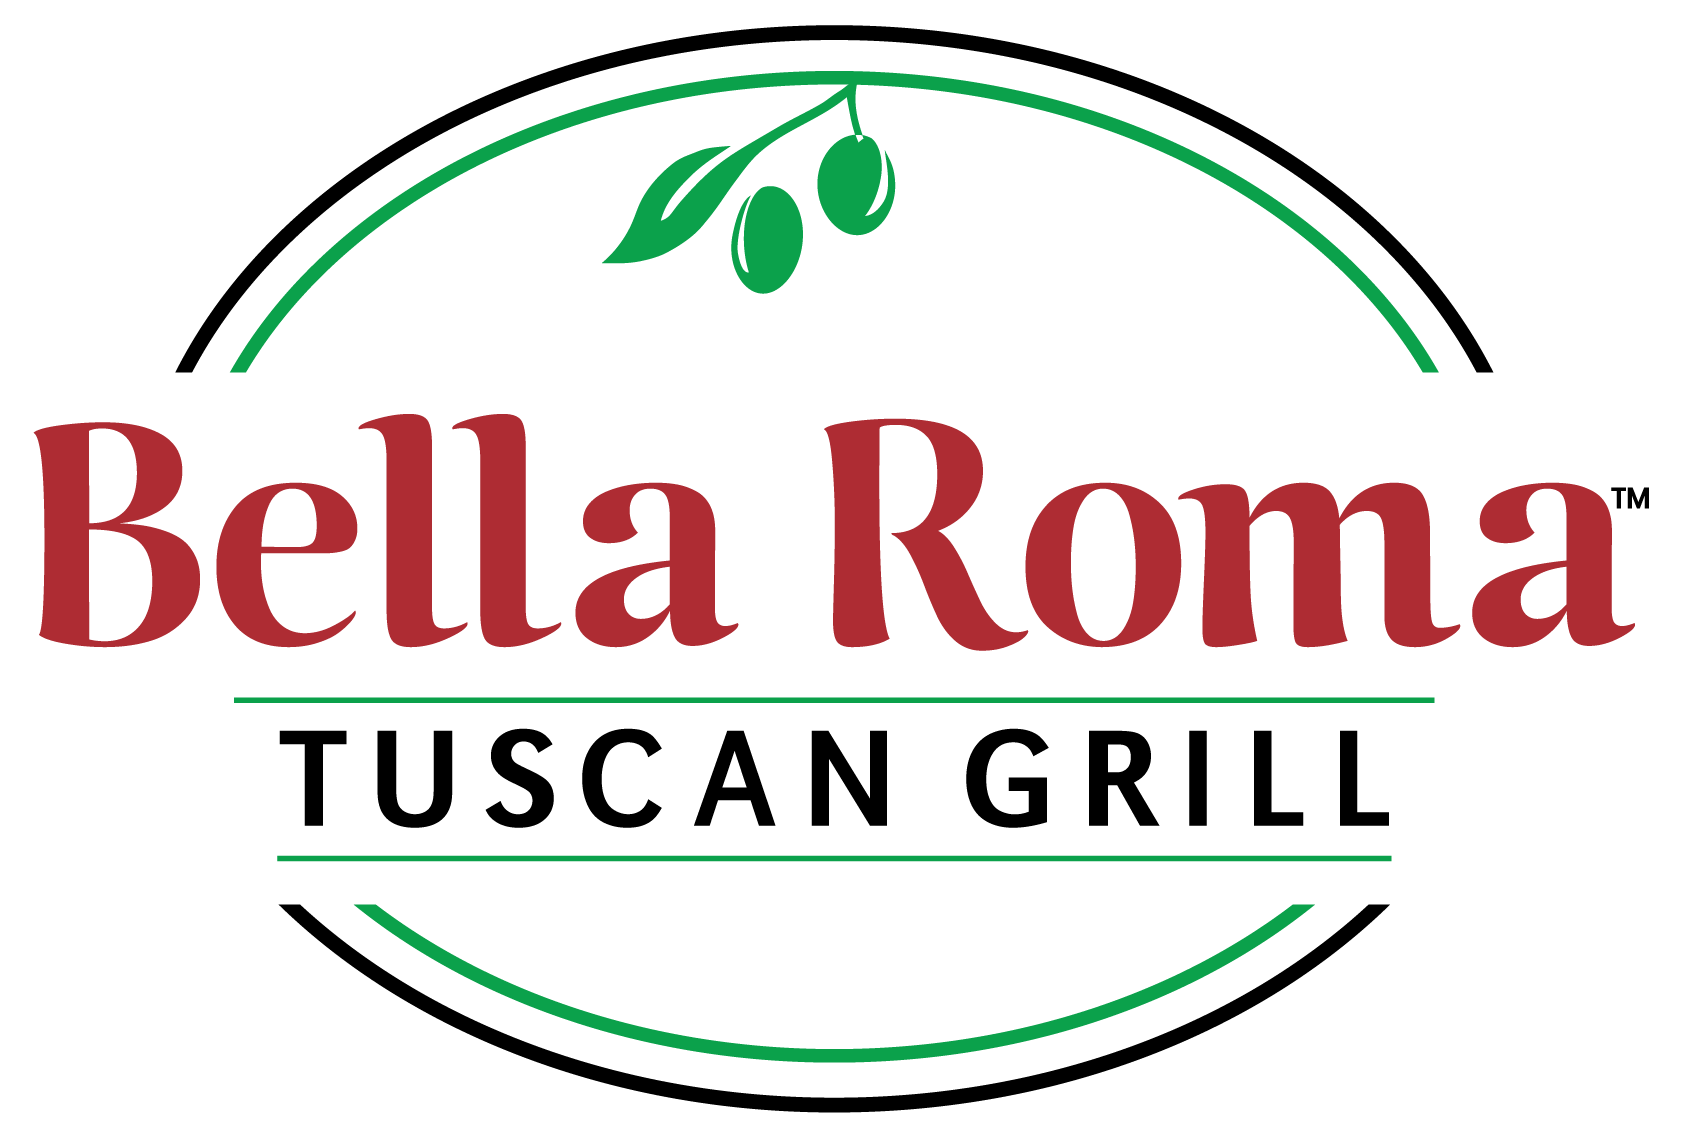 Bella Roma Tuscan Grill Panama City - The Menu